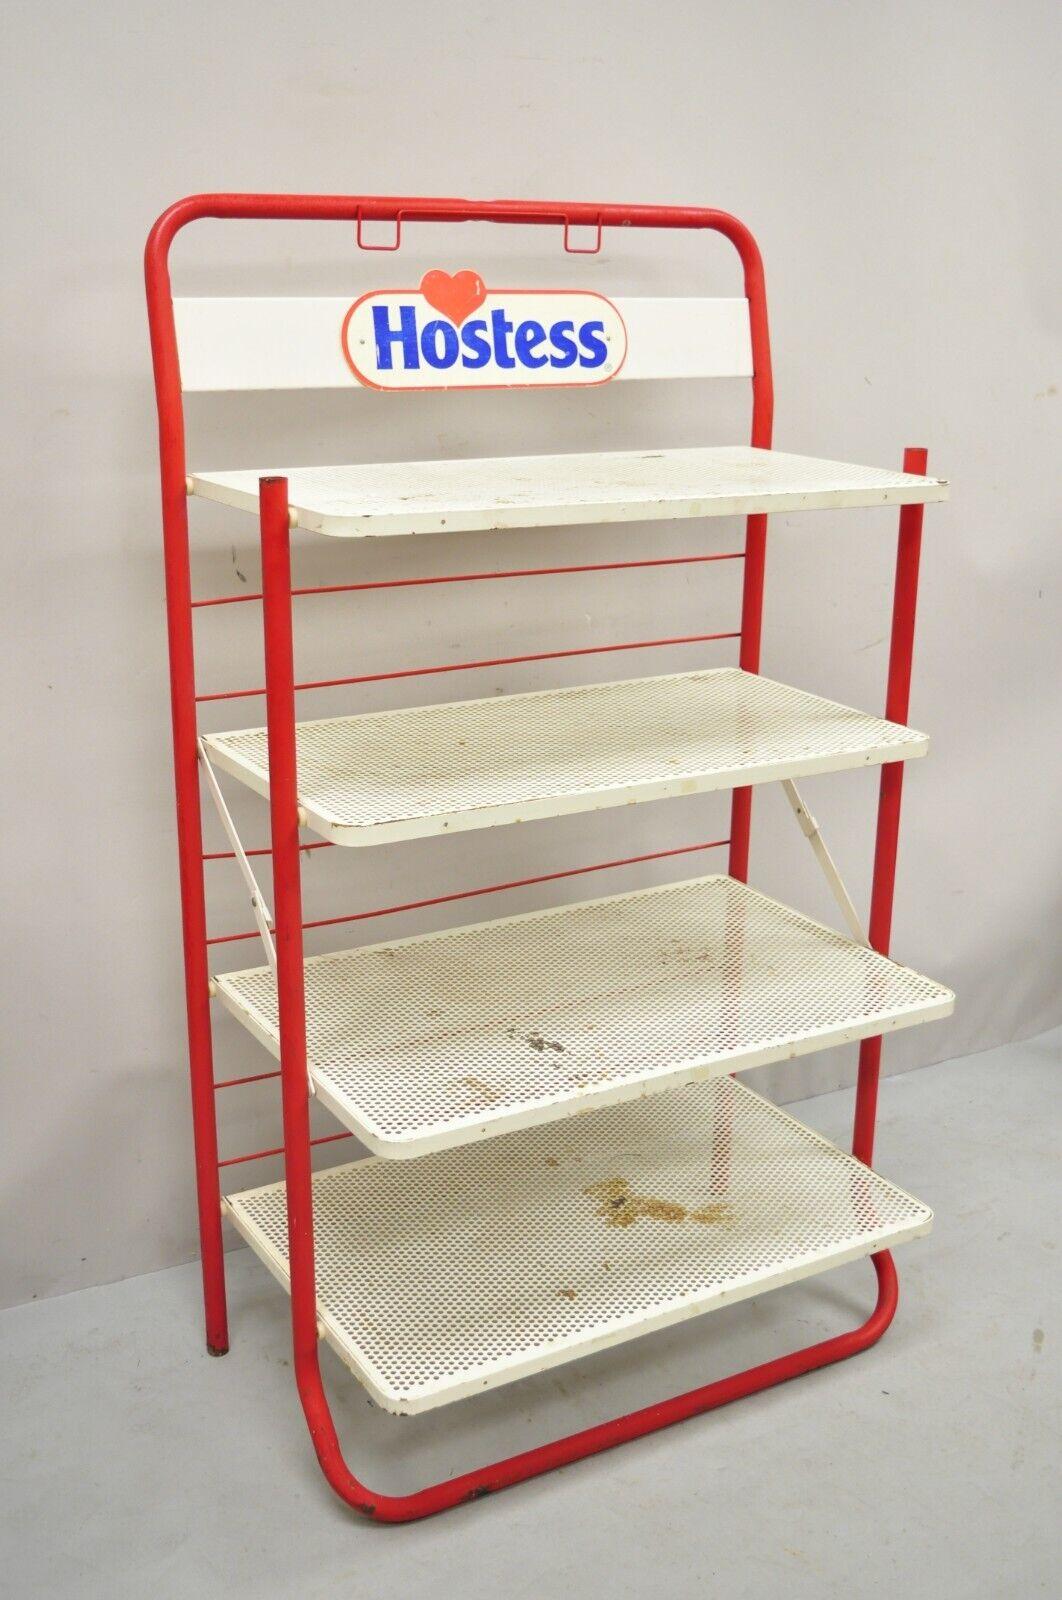 Vintage Hostess Red Metal Perforated 4 Shelf Folding Display Shelf Stand. Item features folding design, original 